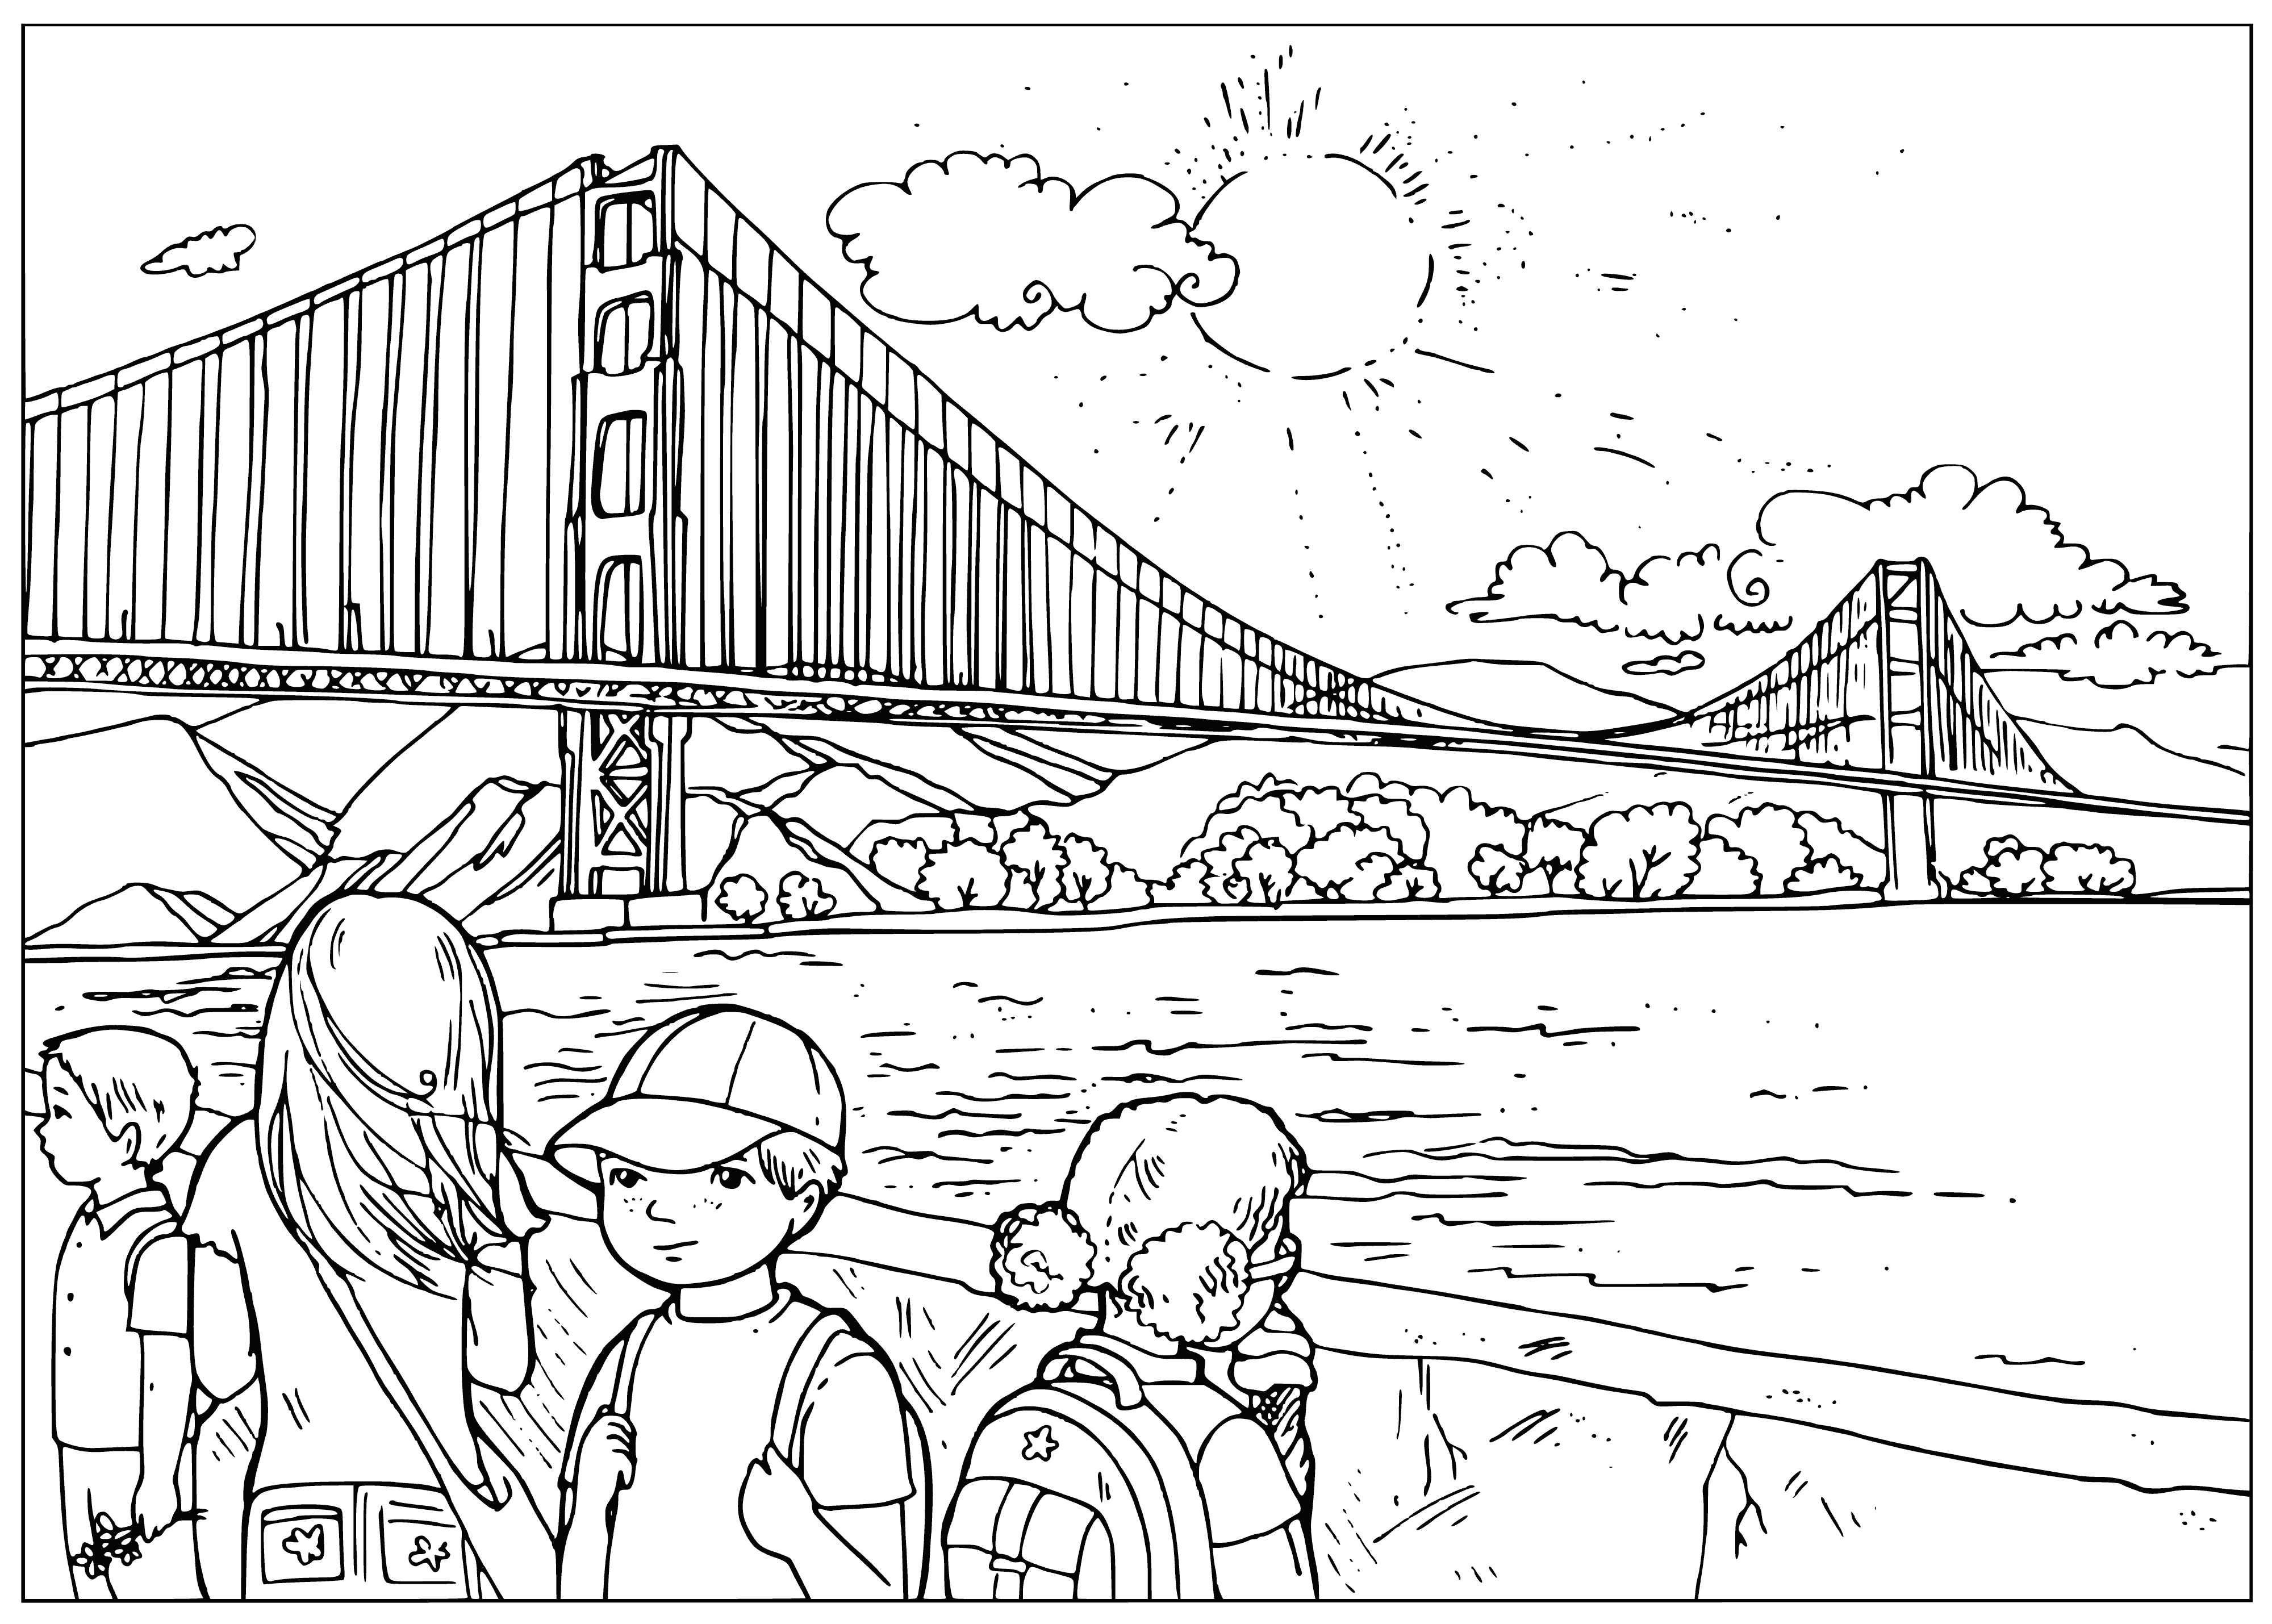 Golden Gate Bridge in San Francisco. USA coloring page